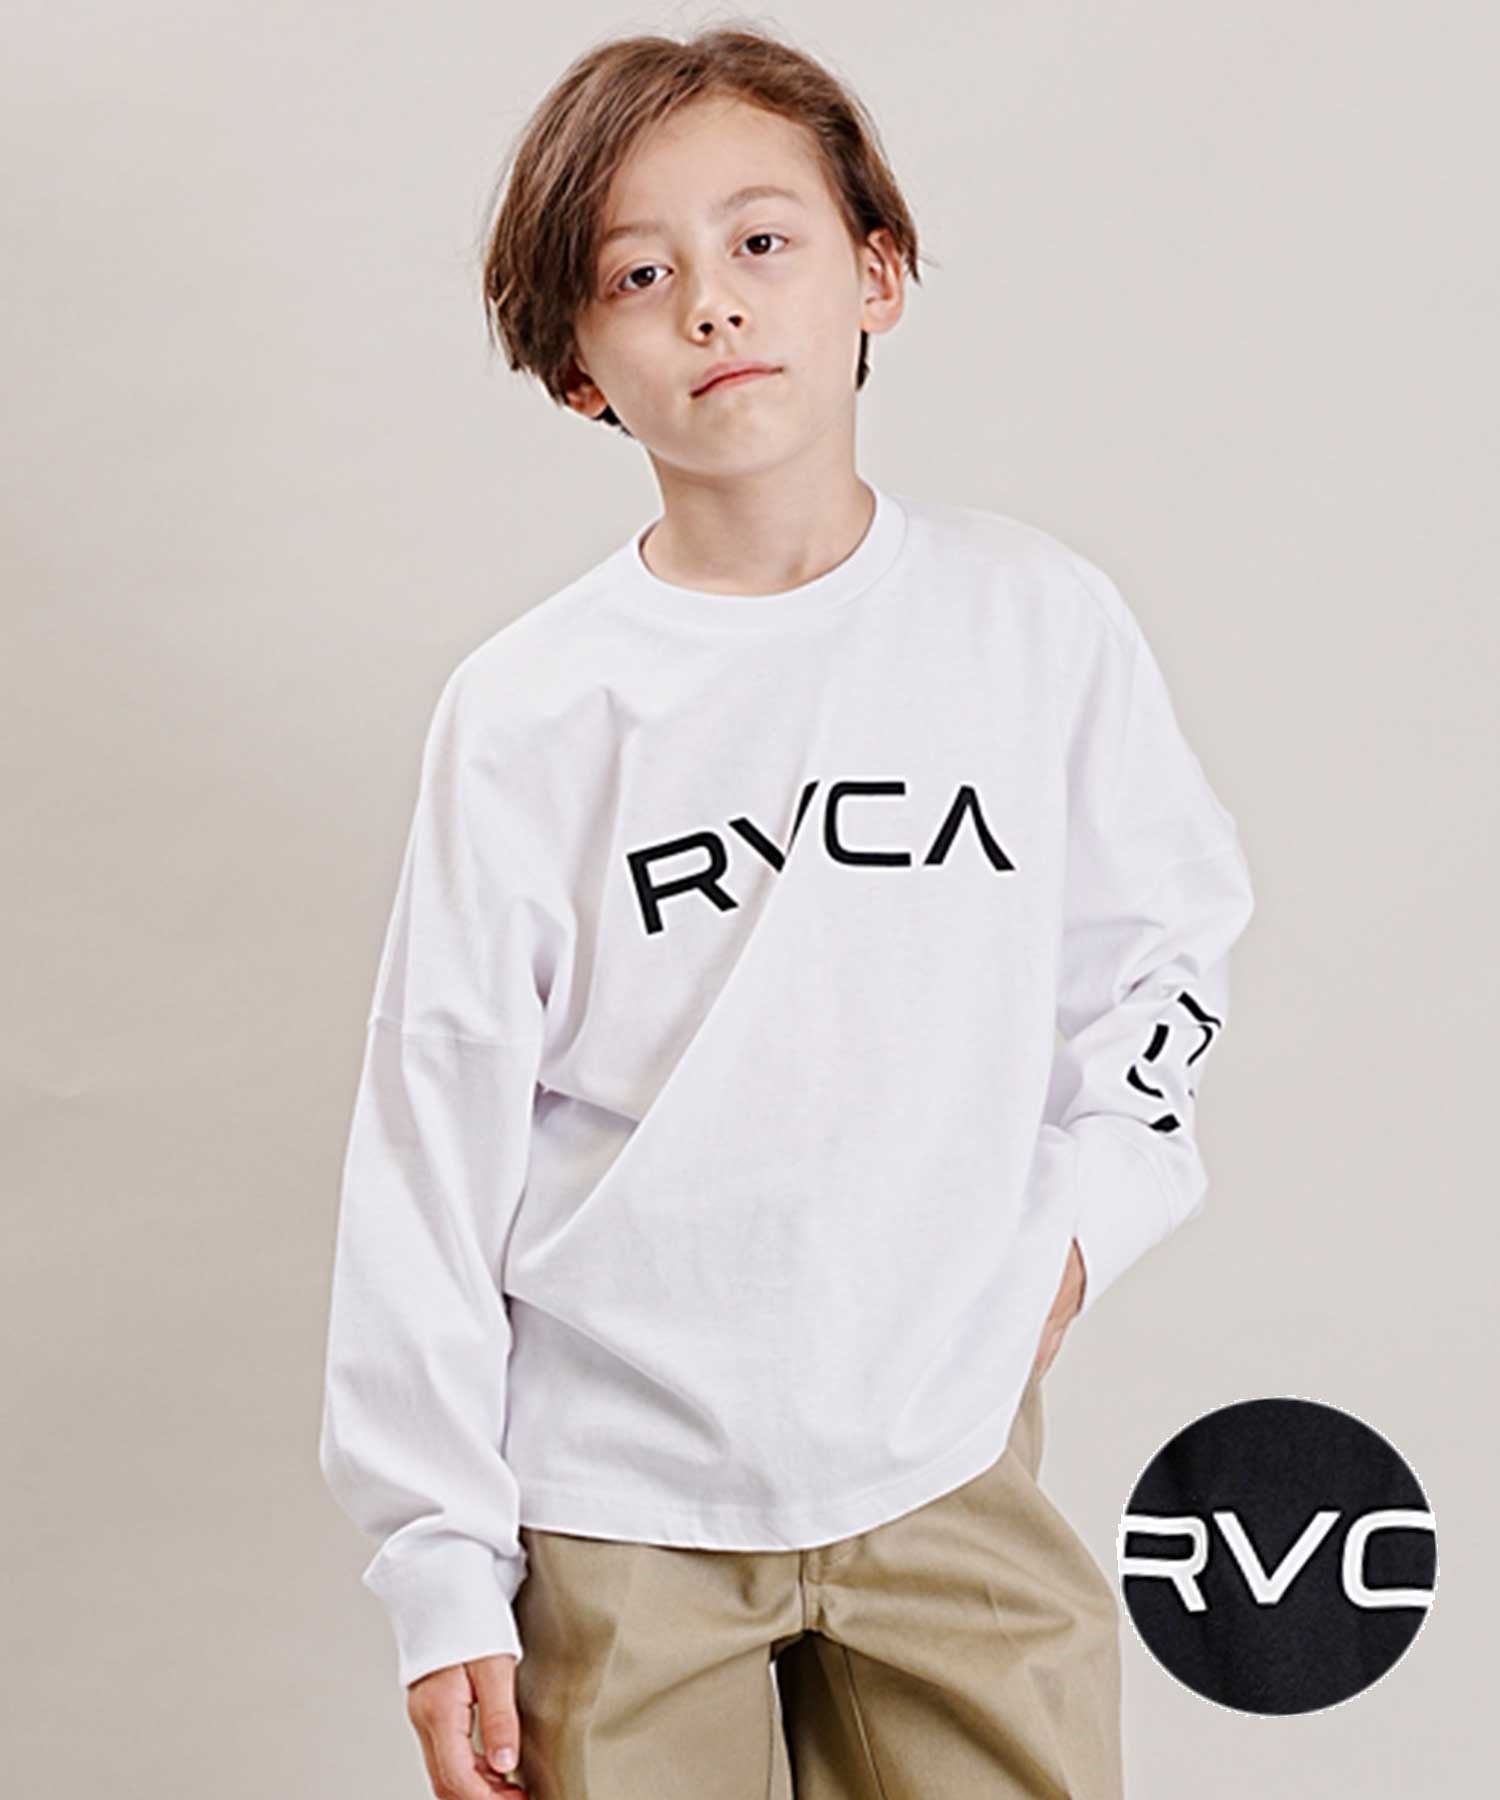 RVCA/ルーカ RVCA BALANCE LT キッズ ジュニア 長袖 Tシャツ ロンT 背中 腕 ロゴ BD046-064(BLK-130cm)